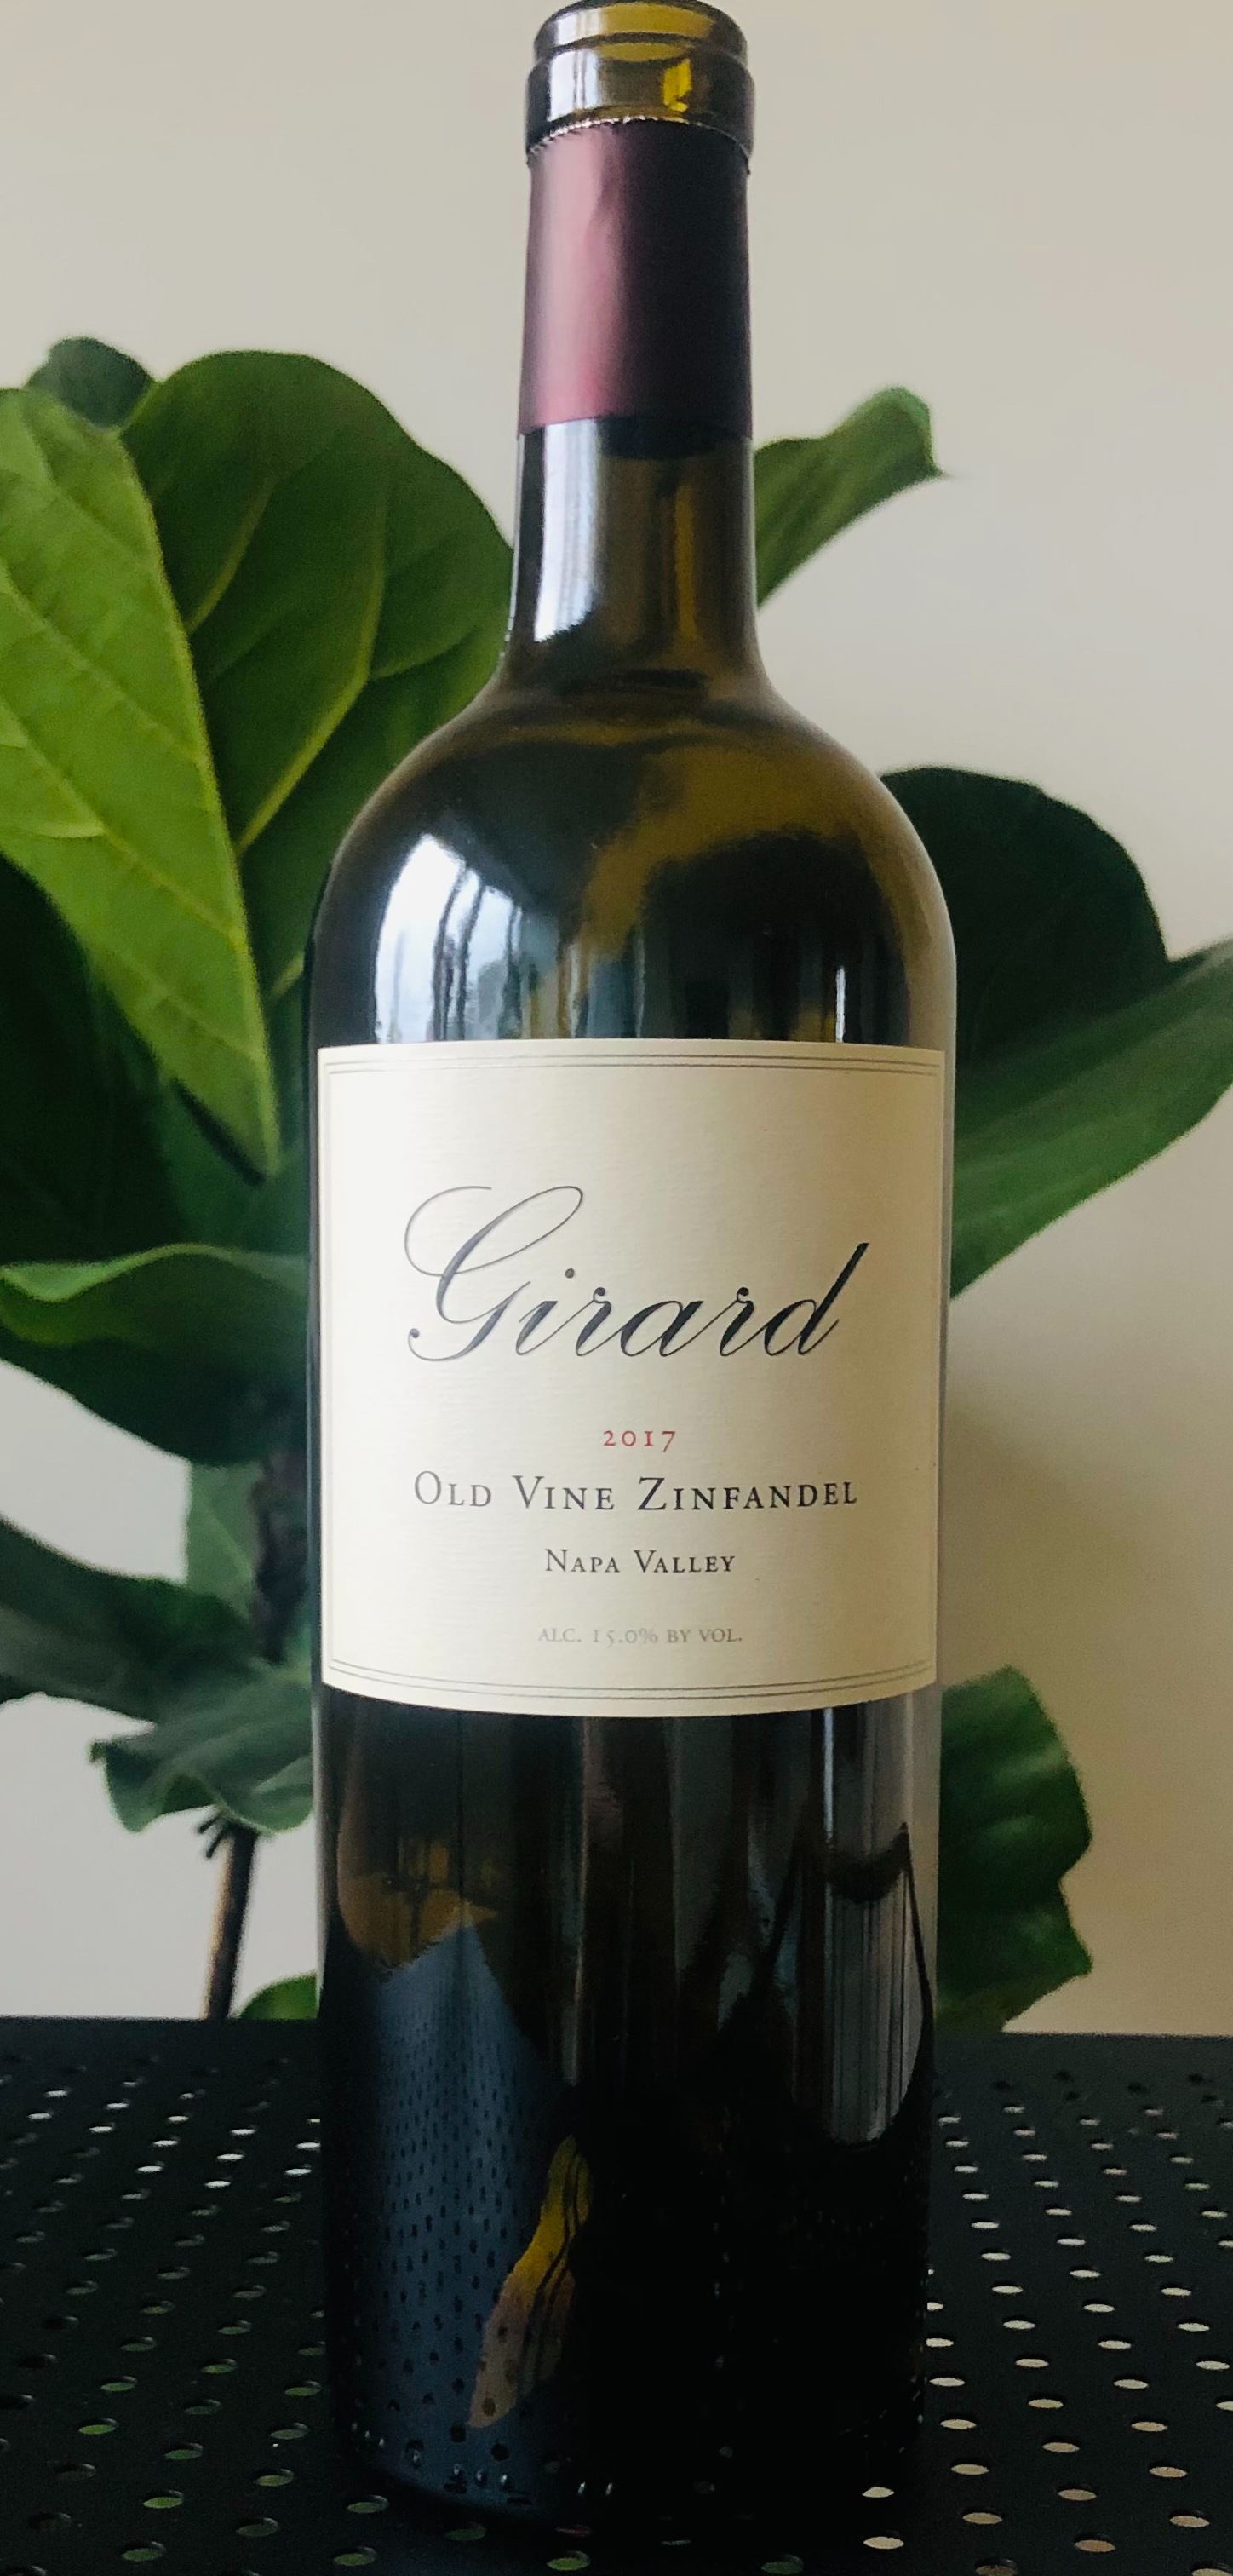 Zinfandel, primitivo, vini rossi, old vine zinfandel, Napa Valley, Girard wine